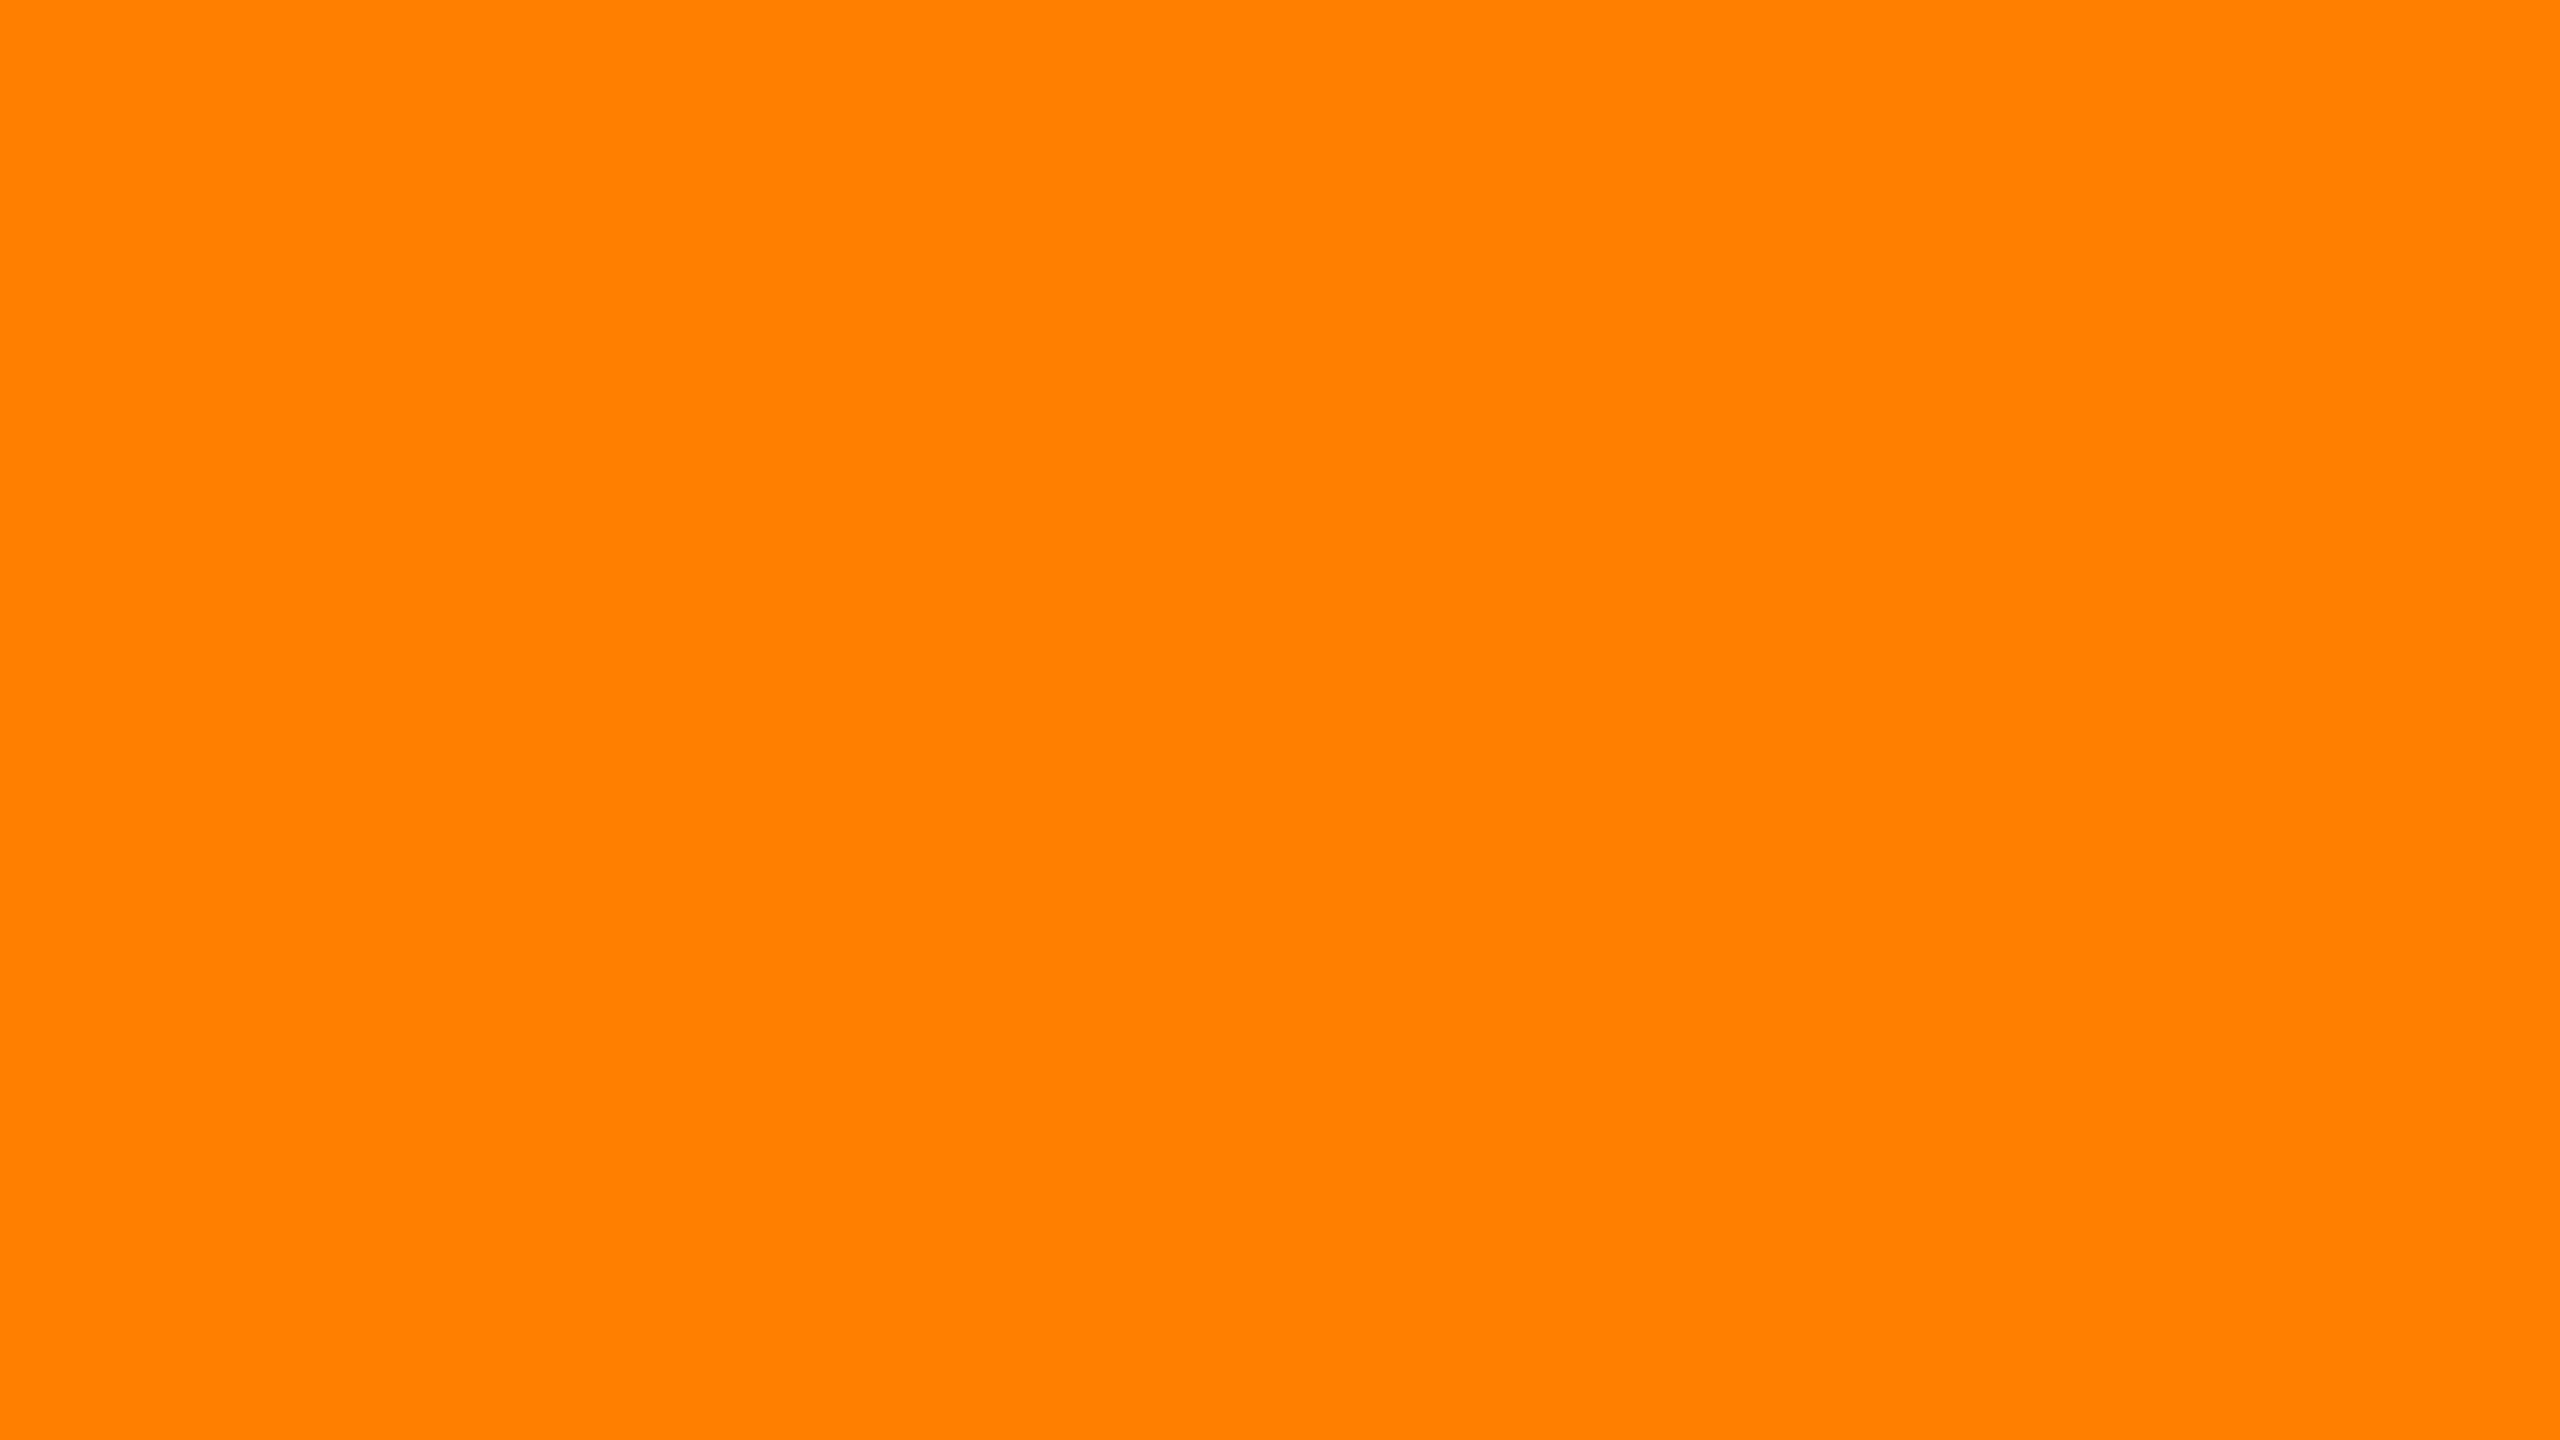 Plain Orange Background HD Orange Wallpapers  HD Wallpapers  ID 68789